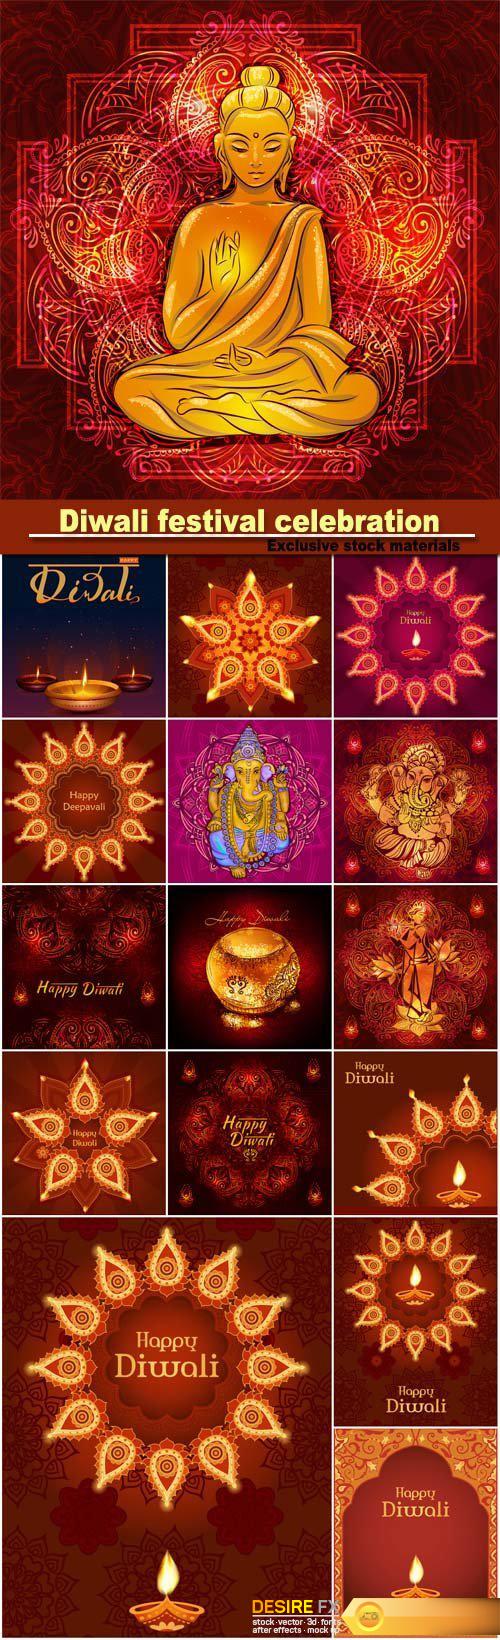 Diwali festival celebration in India, Ganesh Puja, Buddha sitting in the lotus position